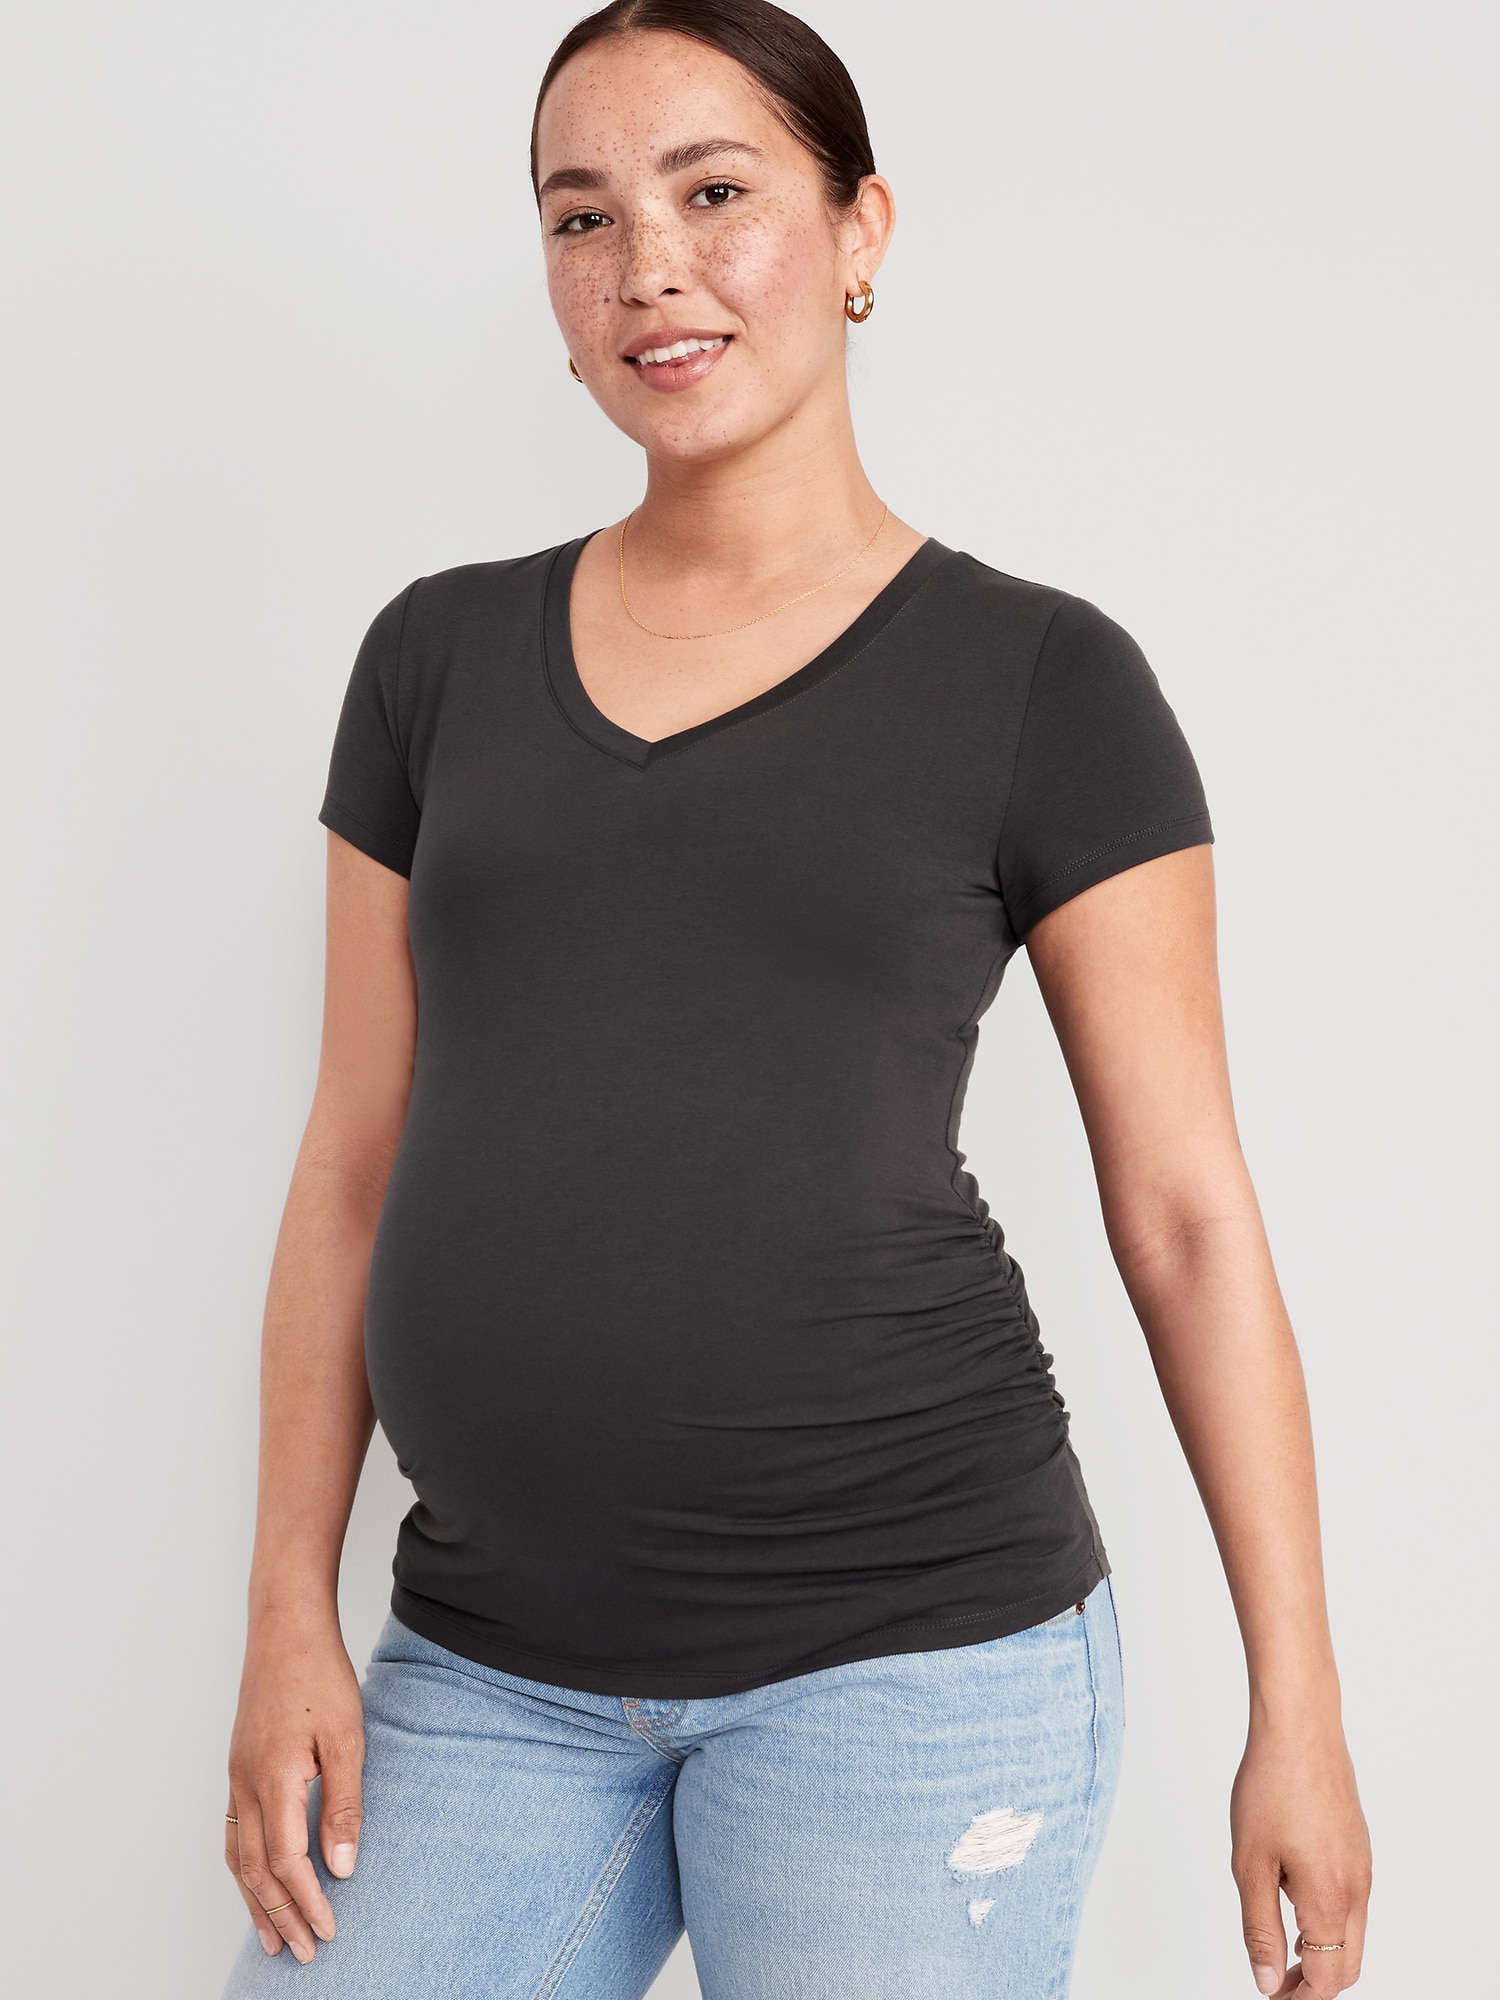 Spdoo Maternity Tops Shirts Short Sleeve V Neck T Shirts Casual